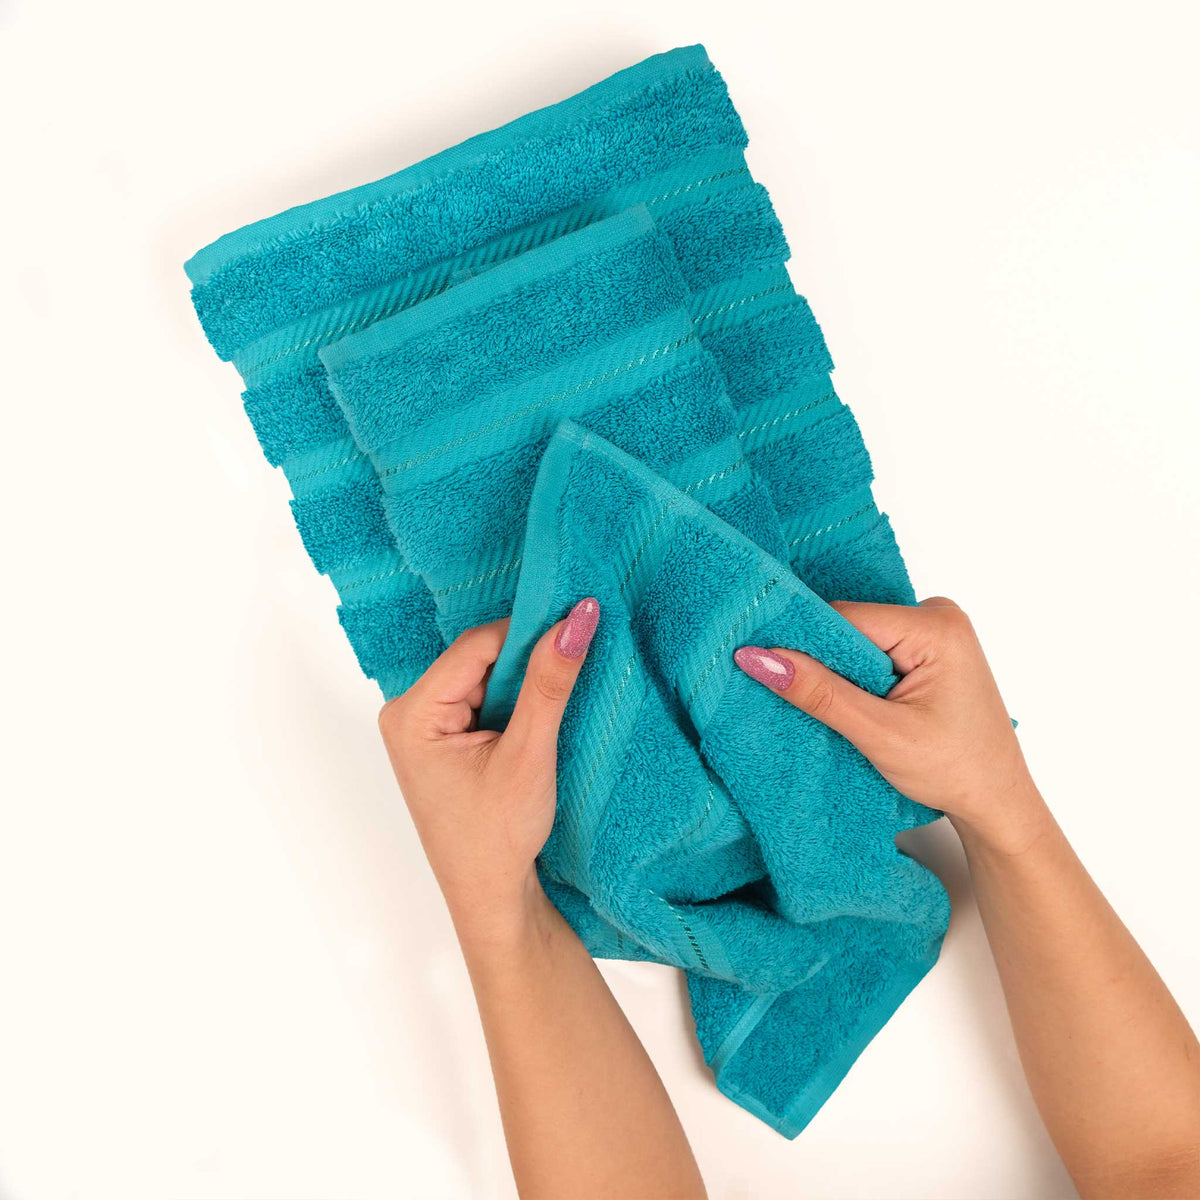 Organic Turkish Cotton Spa Blue Bath Towels